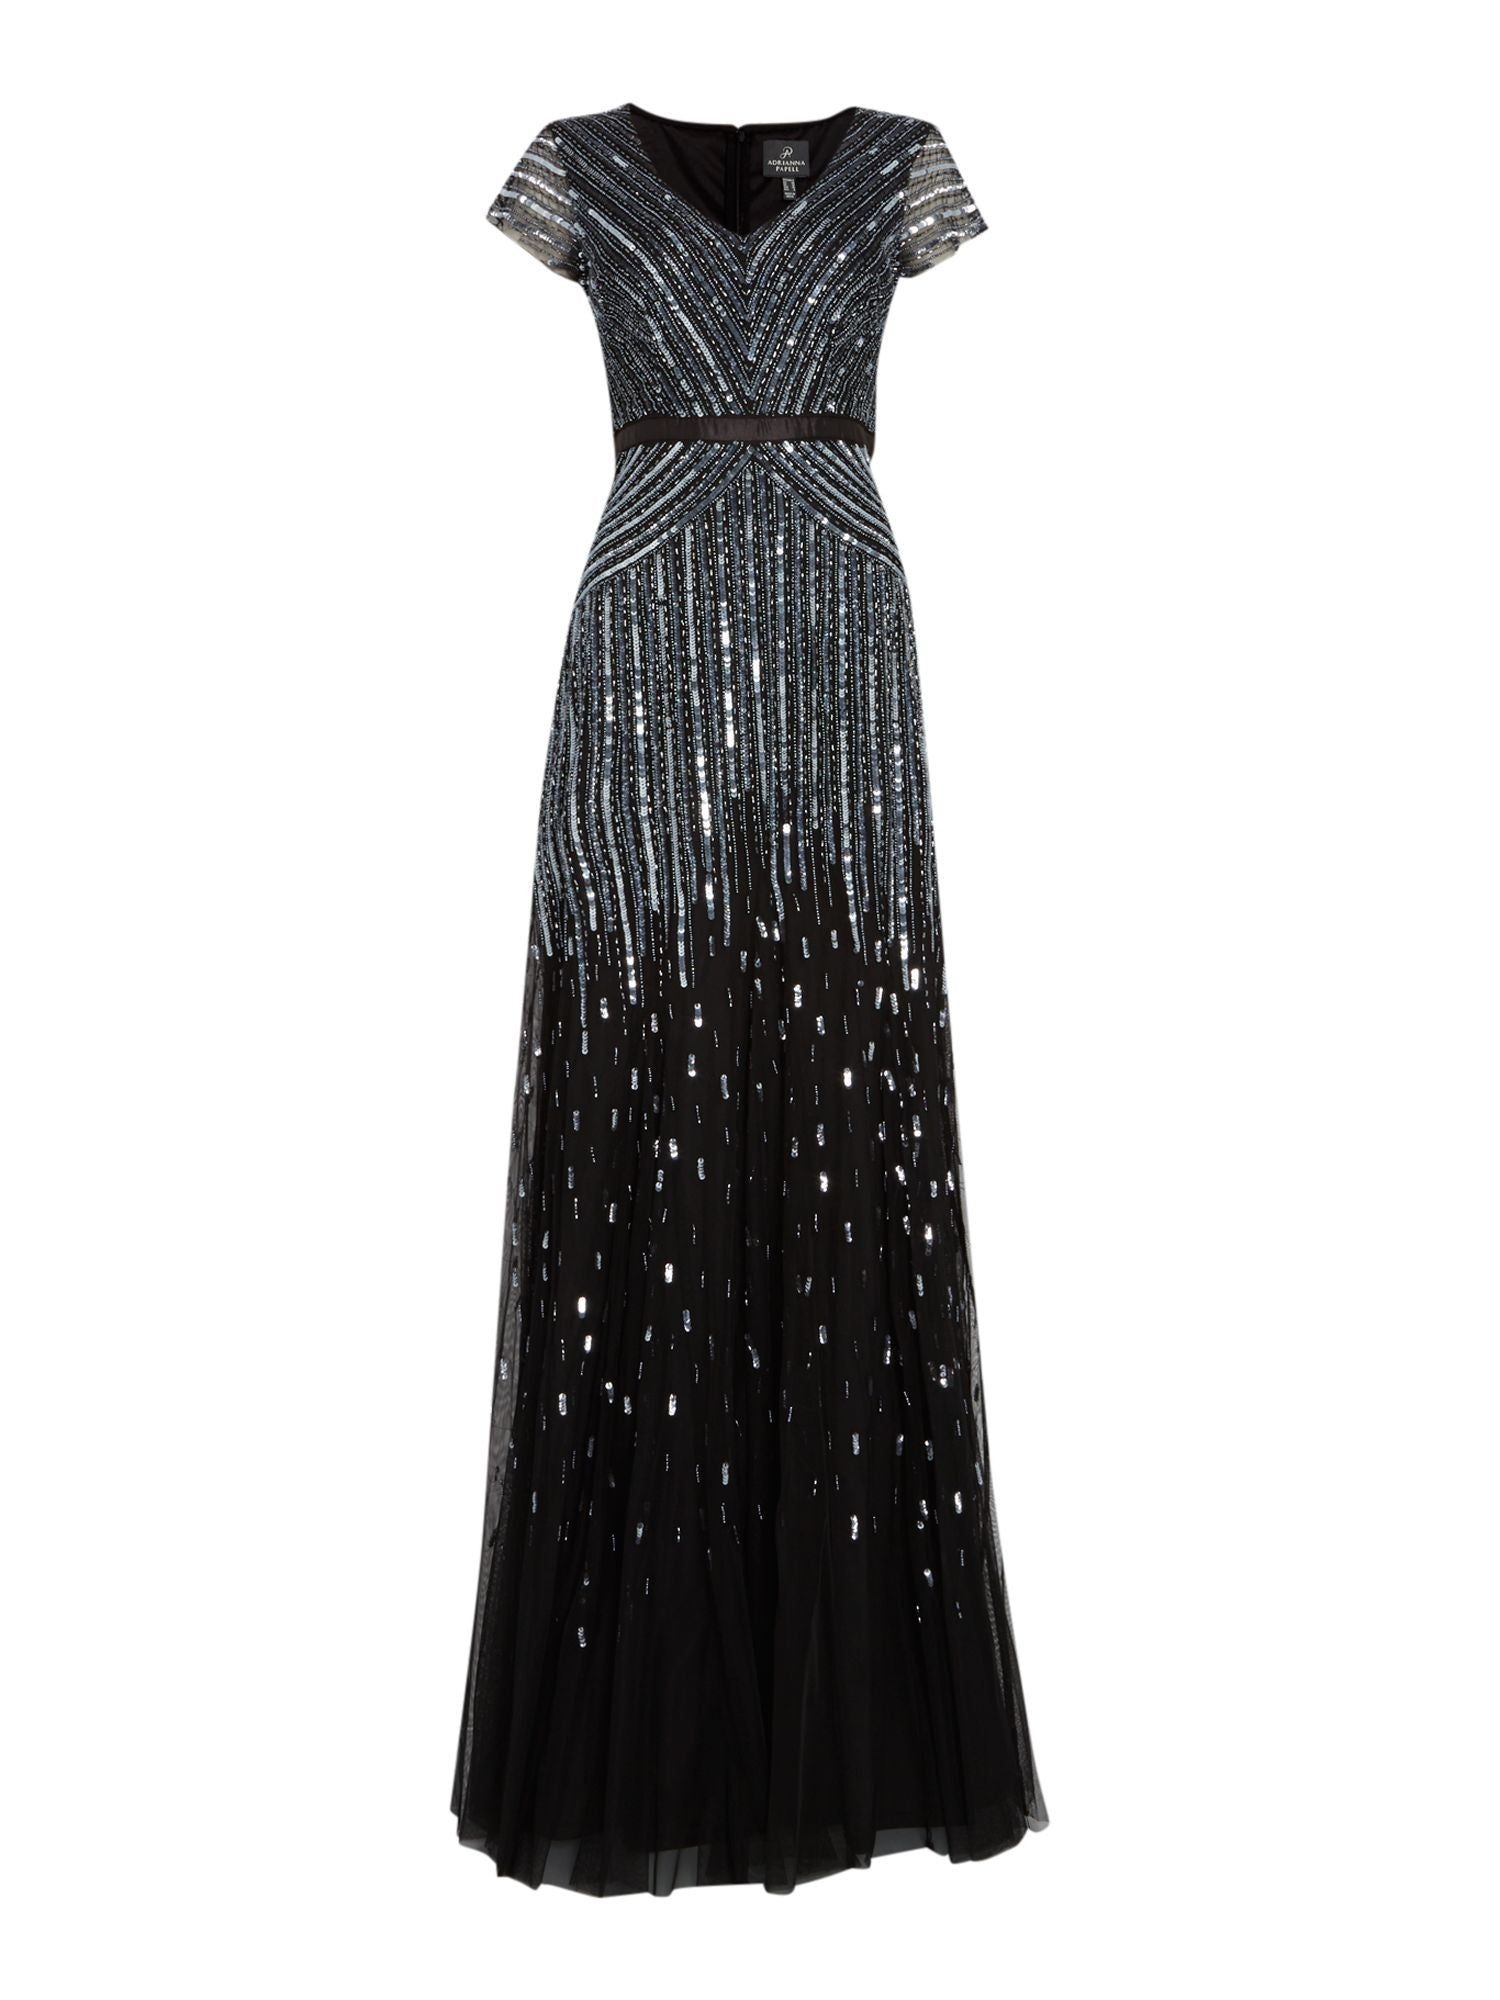 Slim A-line Silhouette Evening Dress | Adrianna Papell 40344 | RK Bridal NYC